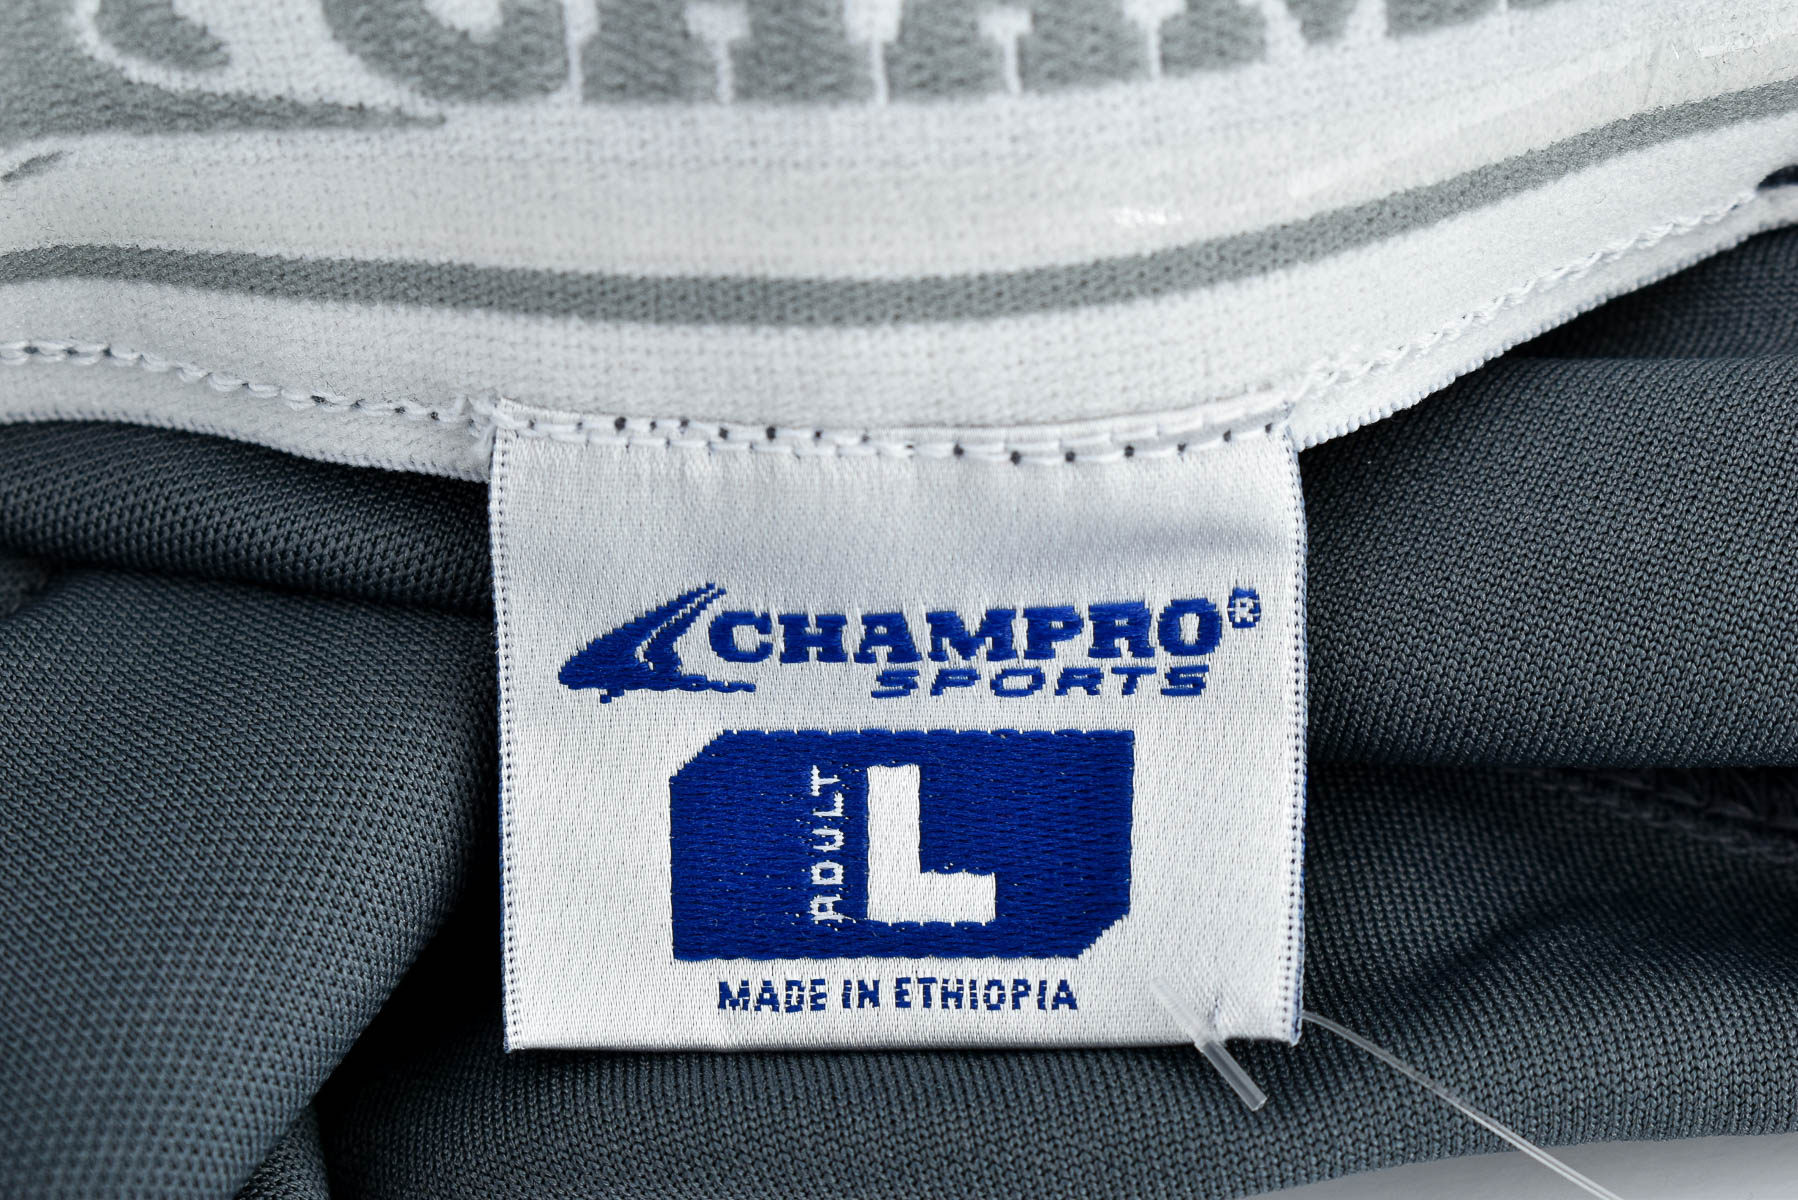 Men's trousers - CHAMPRO SPORTS - 2